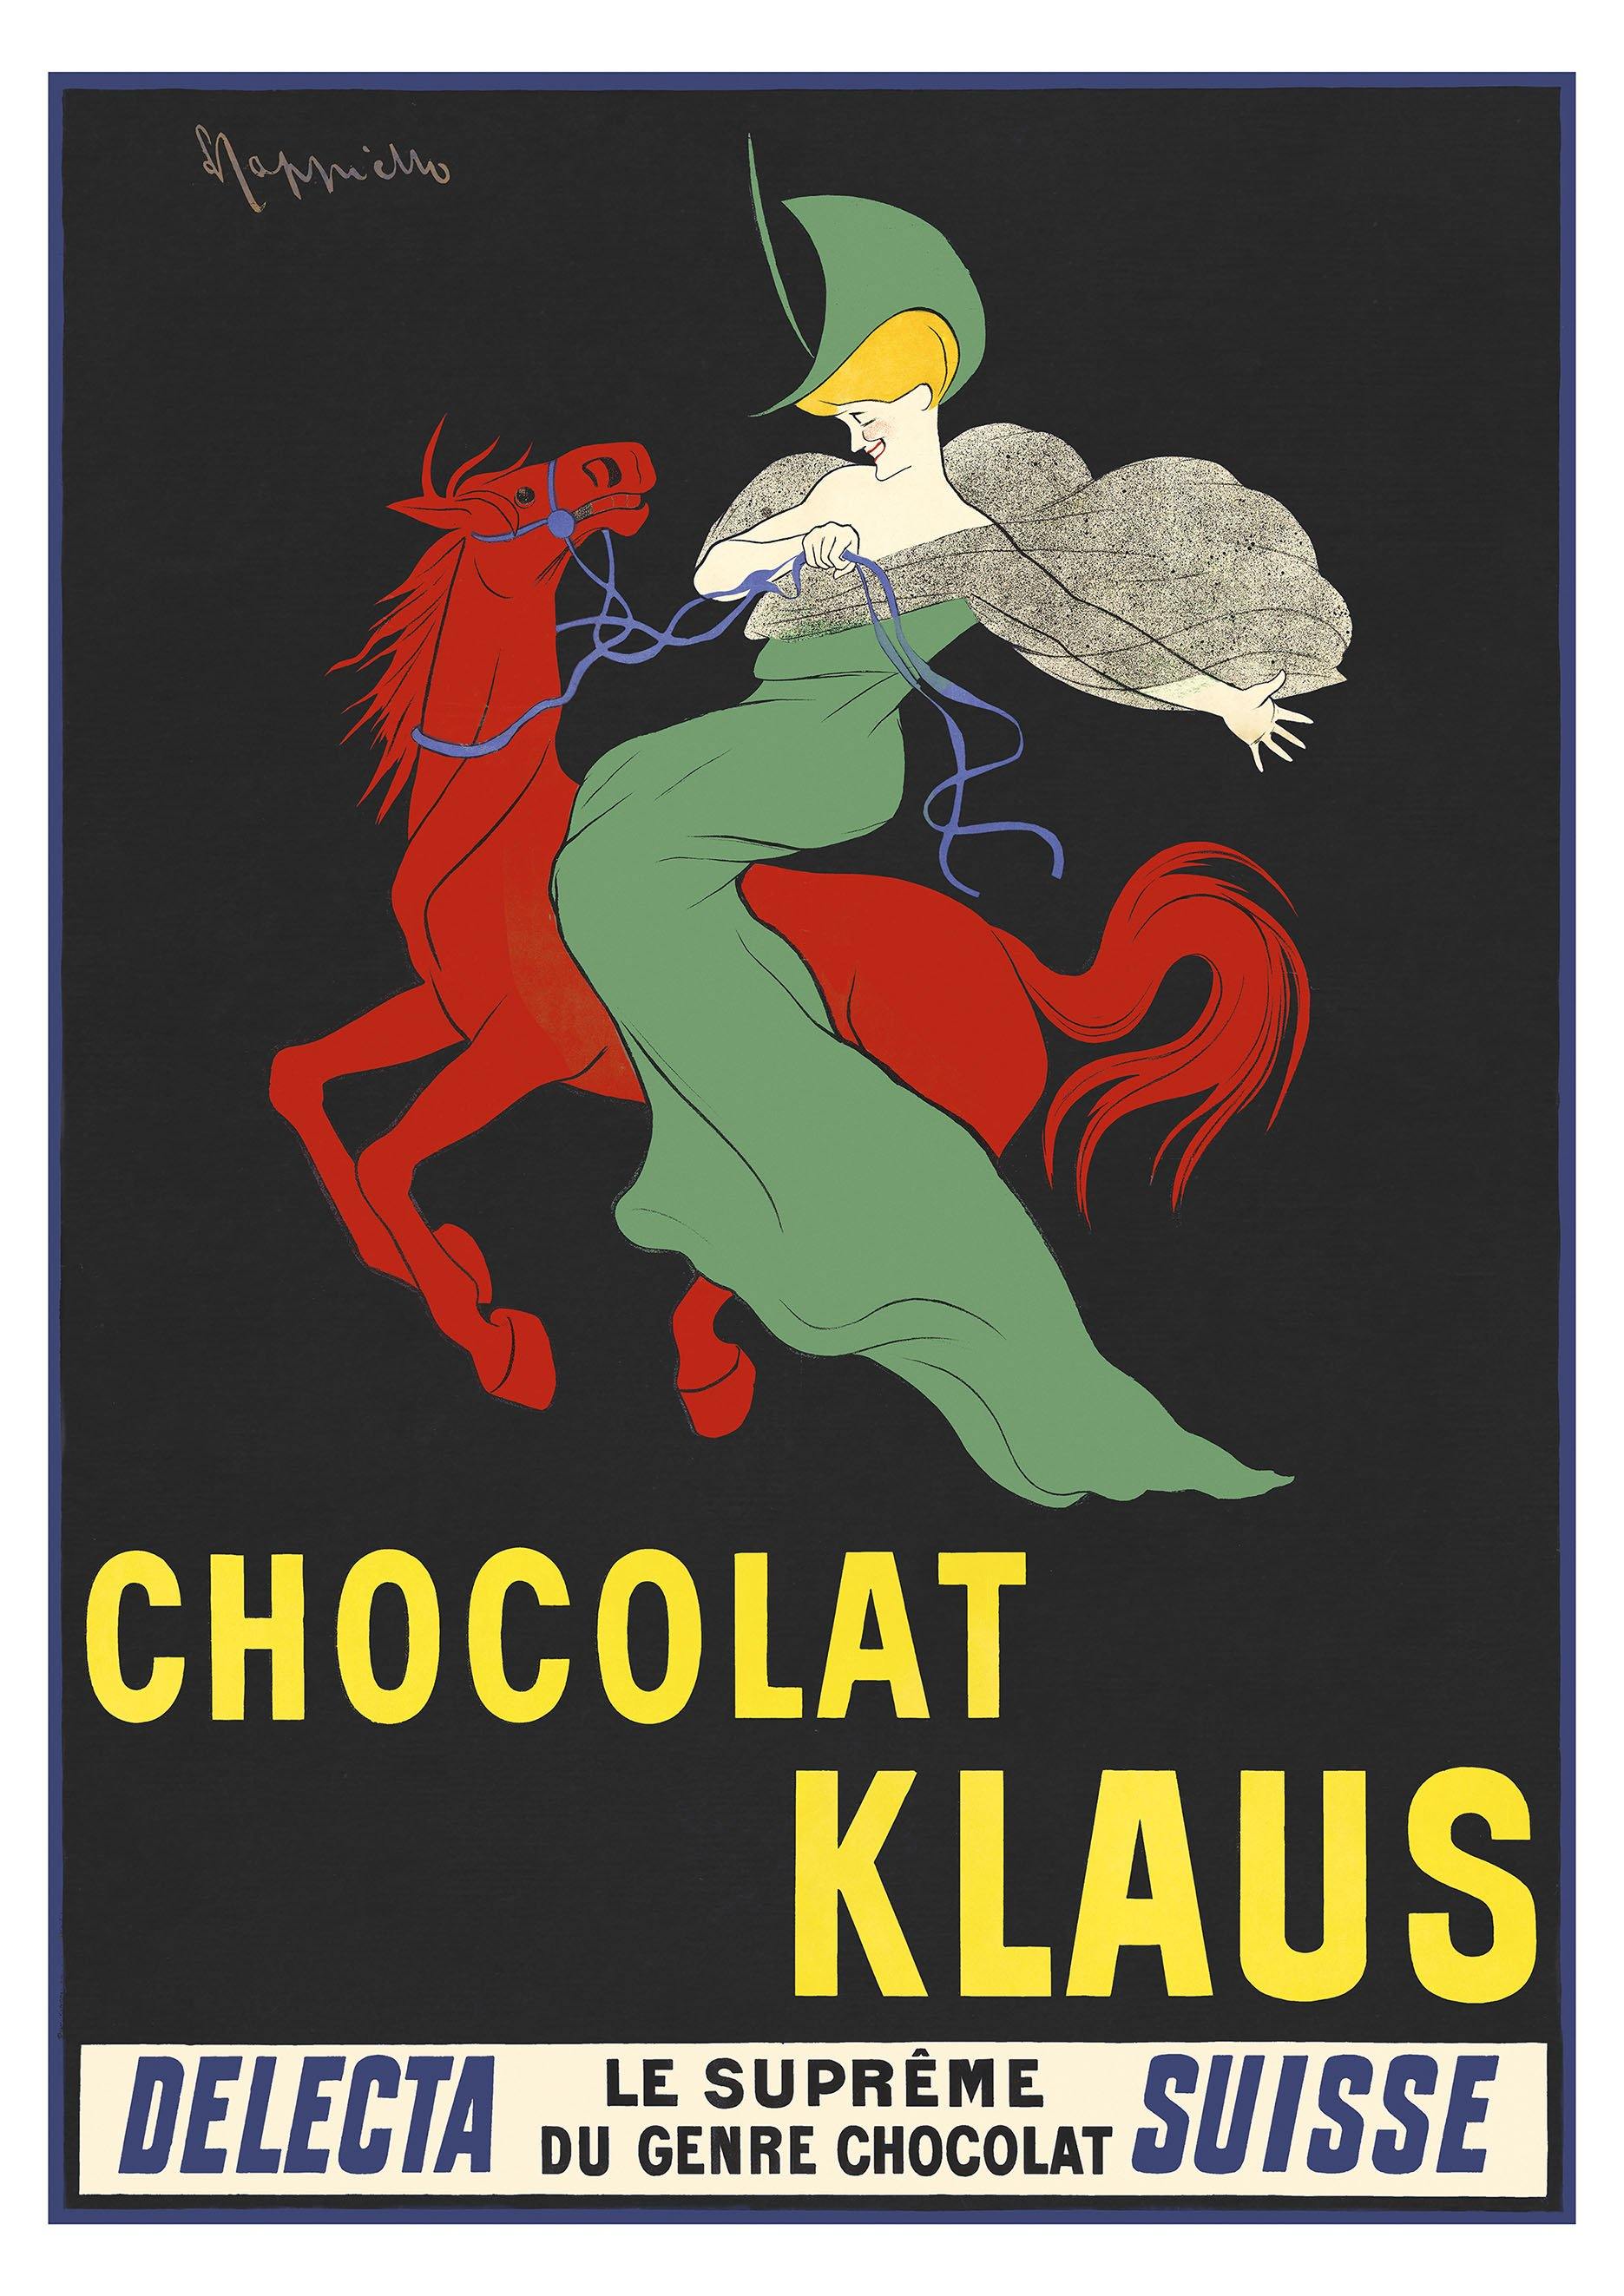 CHOCOLAT KLAUS POSTER: Vintage Chocolate Advertising Art Print - Pimlico Prints